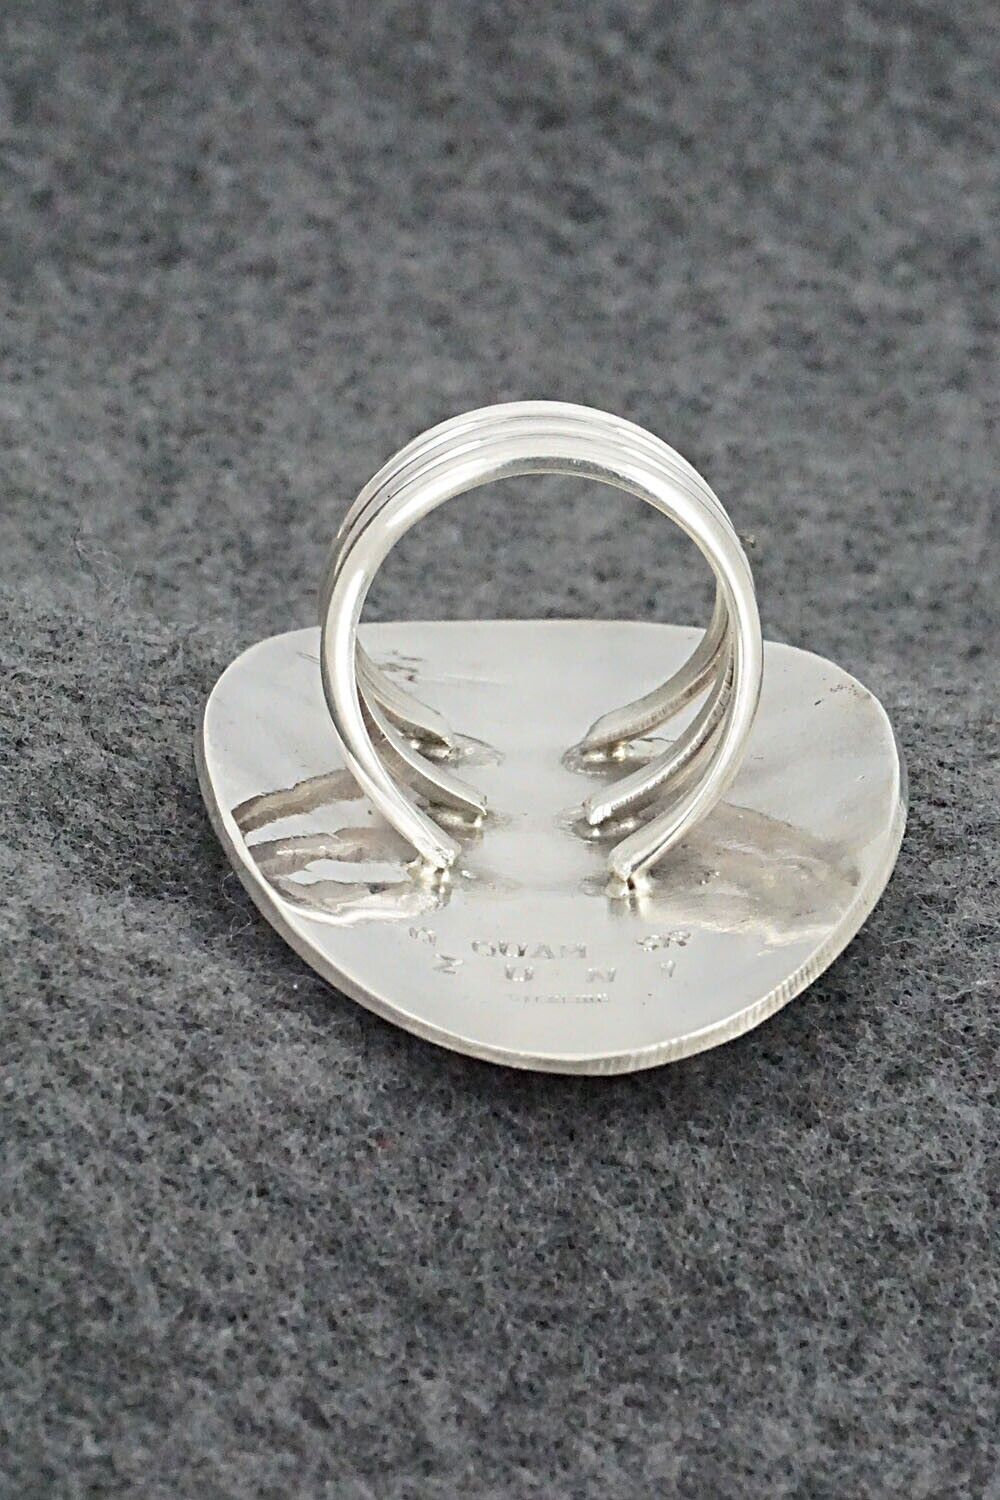 Multi-Stone & Sterling Silver Ring - Quintin Quam Sr. - Size 10.5